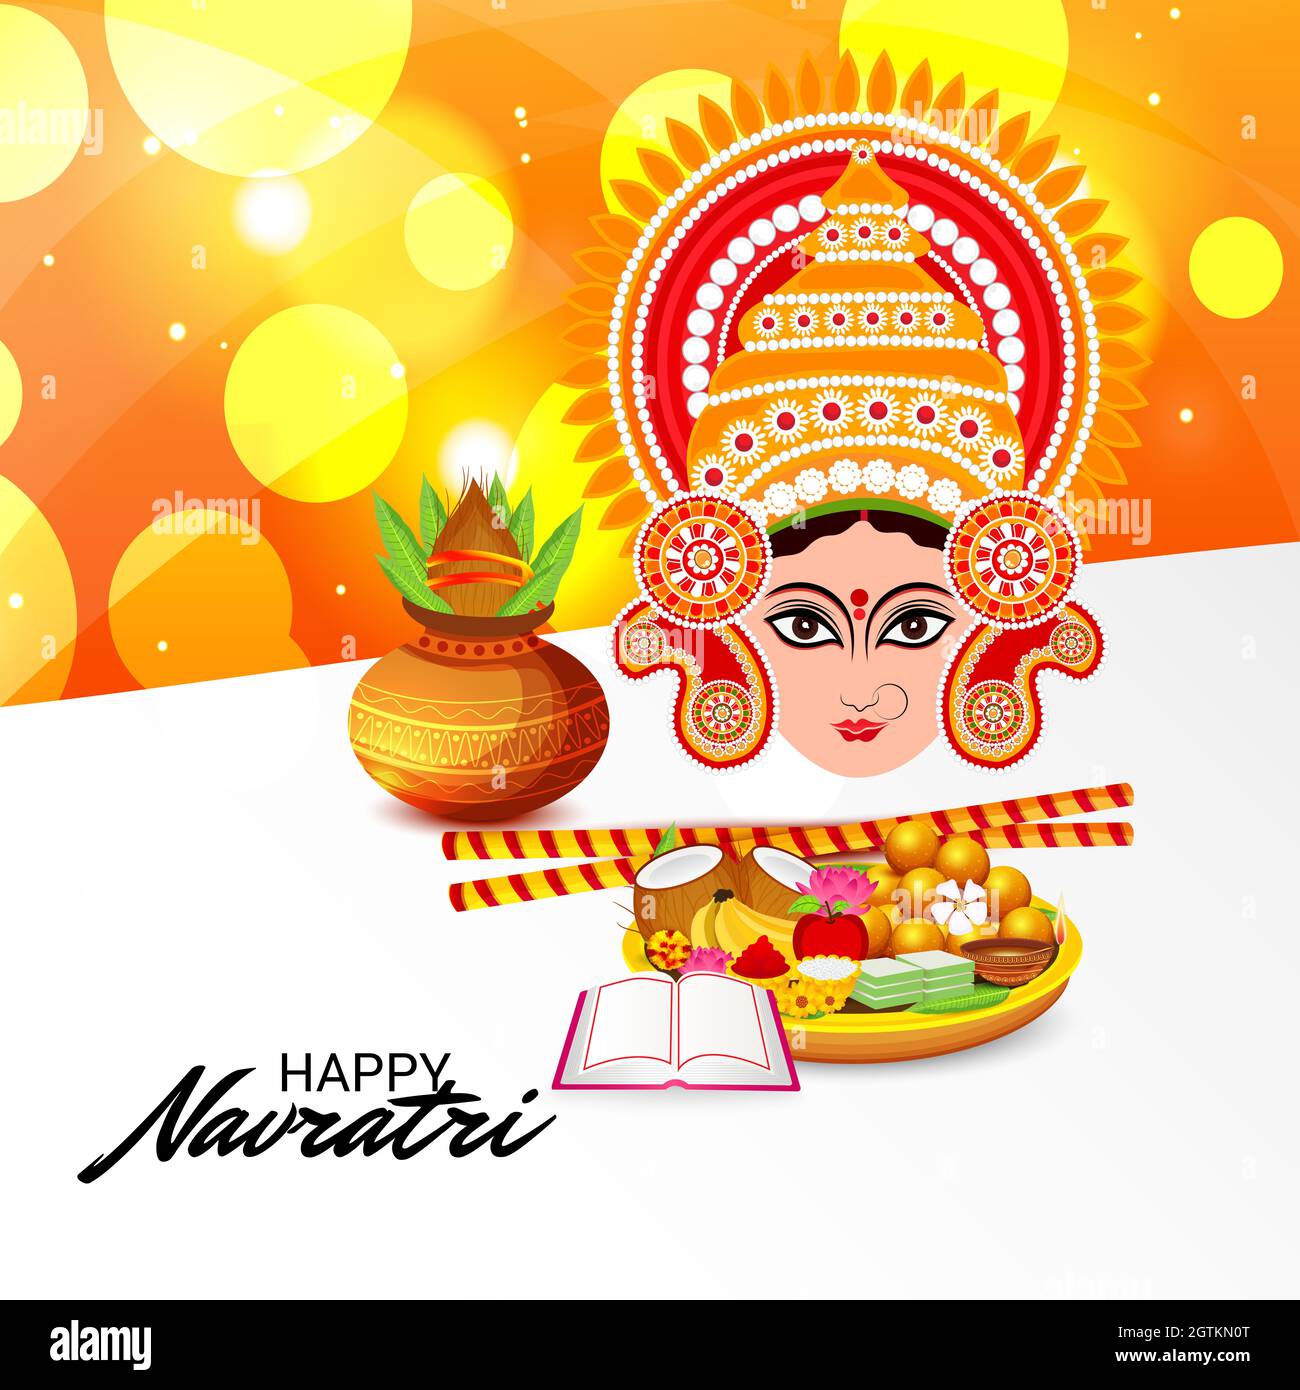 Vector illustration of a Background for Happy Navratri Celebration ...